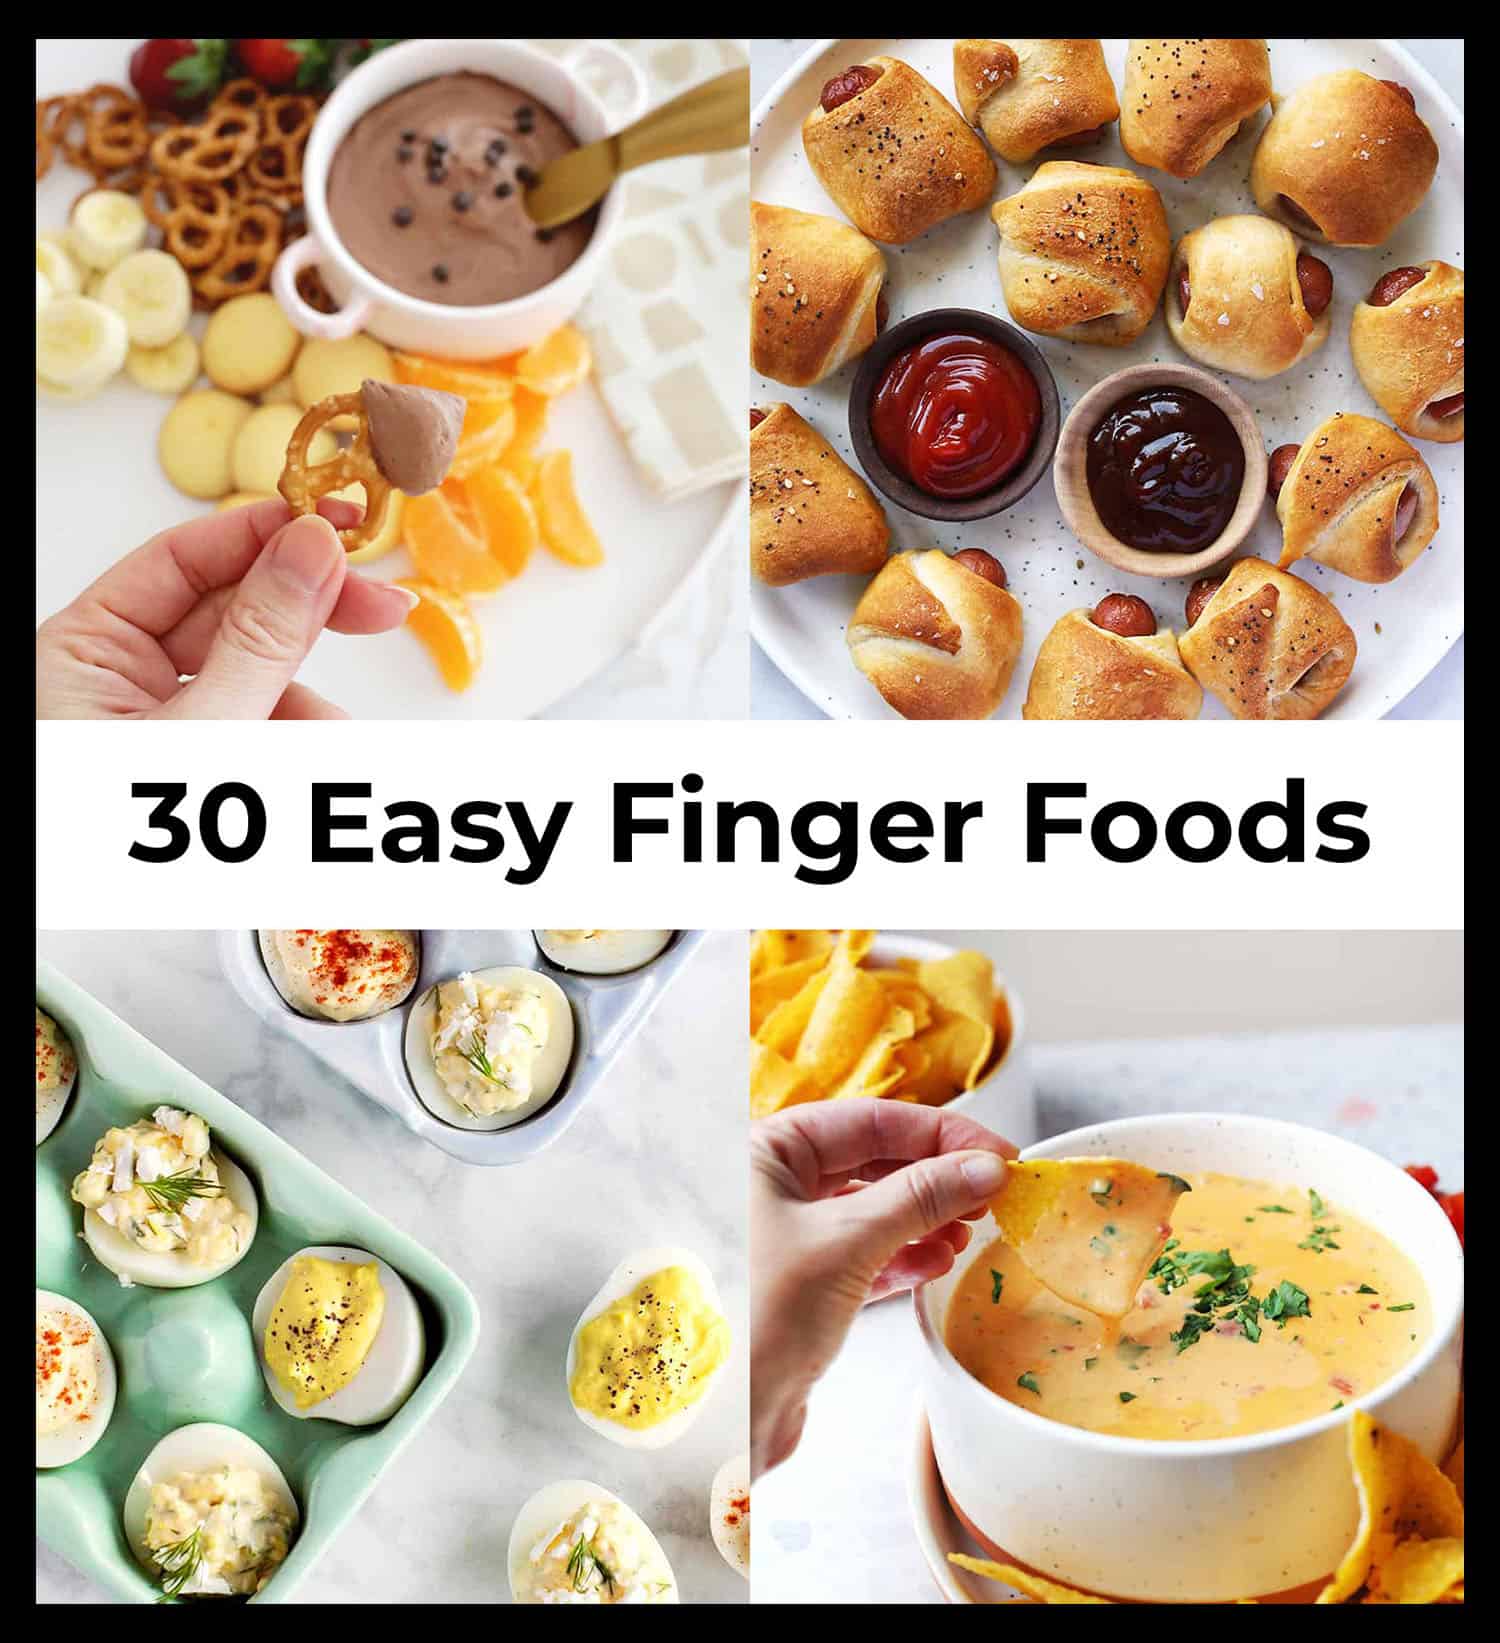 30 Easy Finger Food Ideas